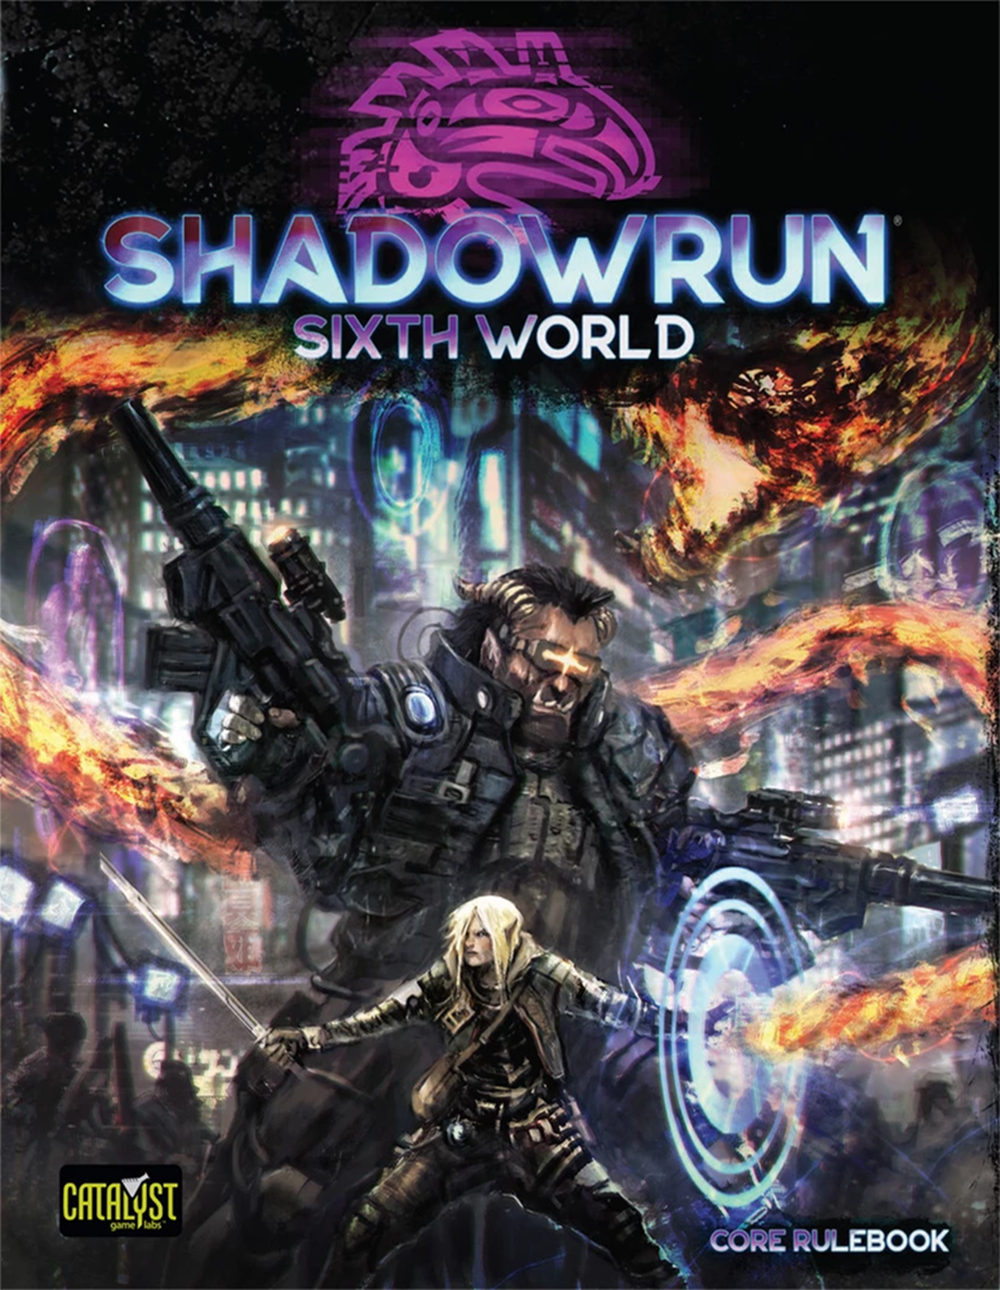 Shadowrun 6 - Streetpédia - Black Book Editions